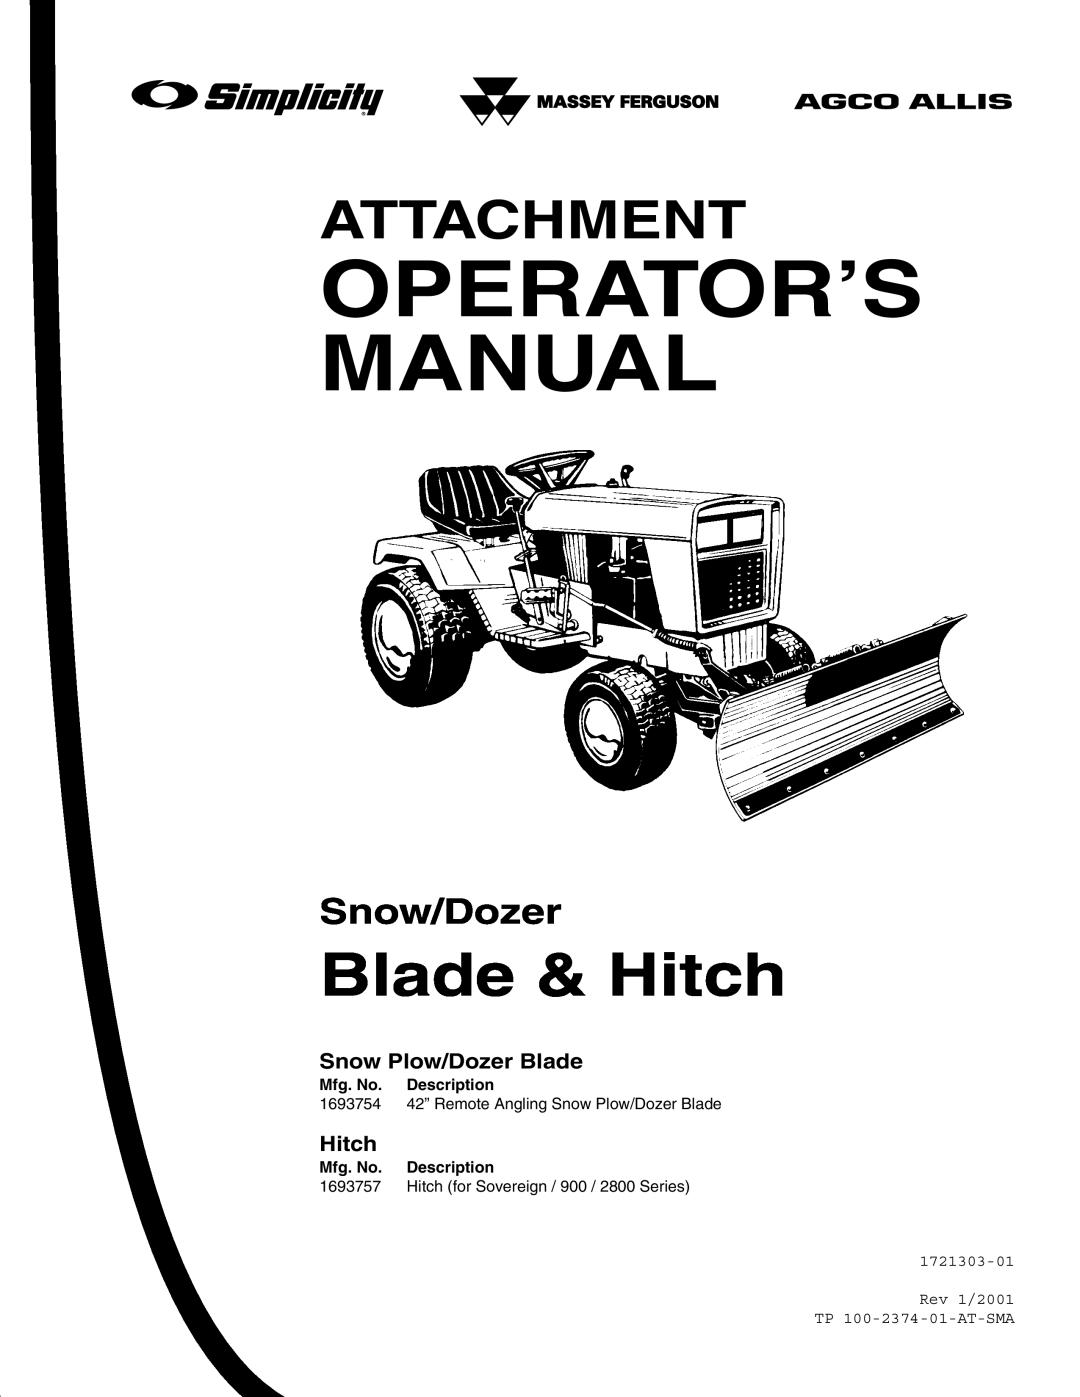 Snapper 1721303-01 manual Attachment, Snow Plow/Dozer Blade, Operator’S Manual, Blade & Hitch, Snow/Dozer 